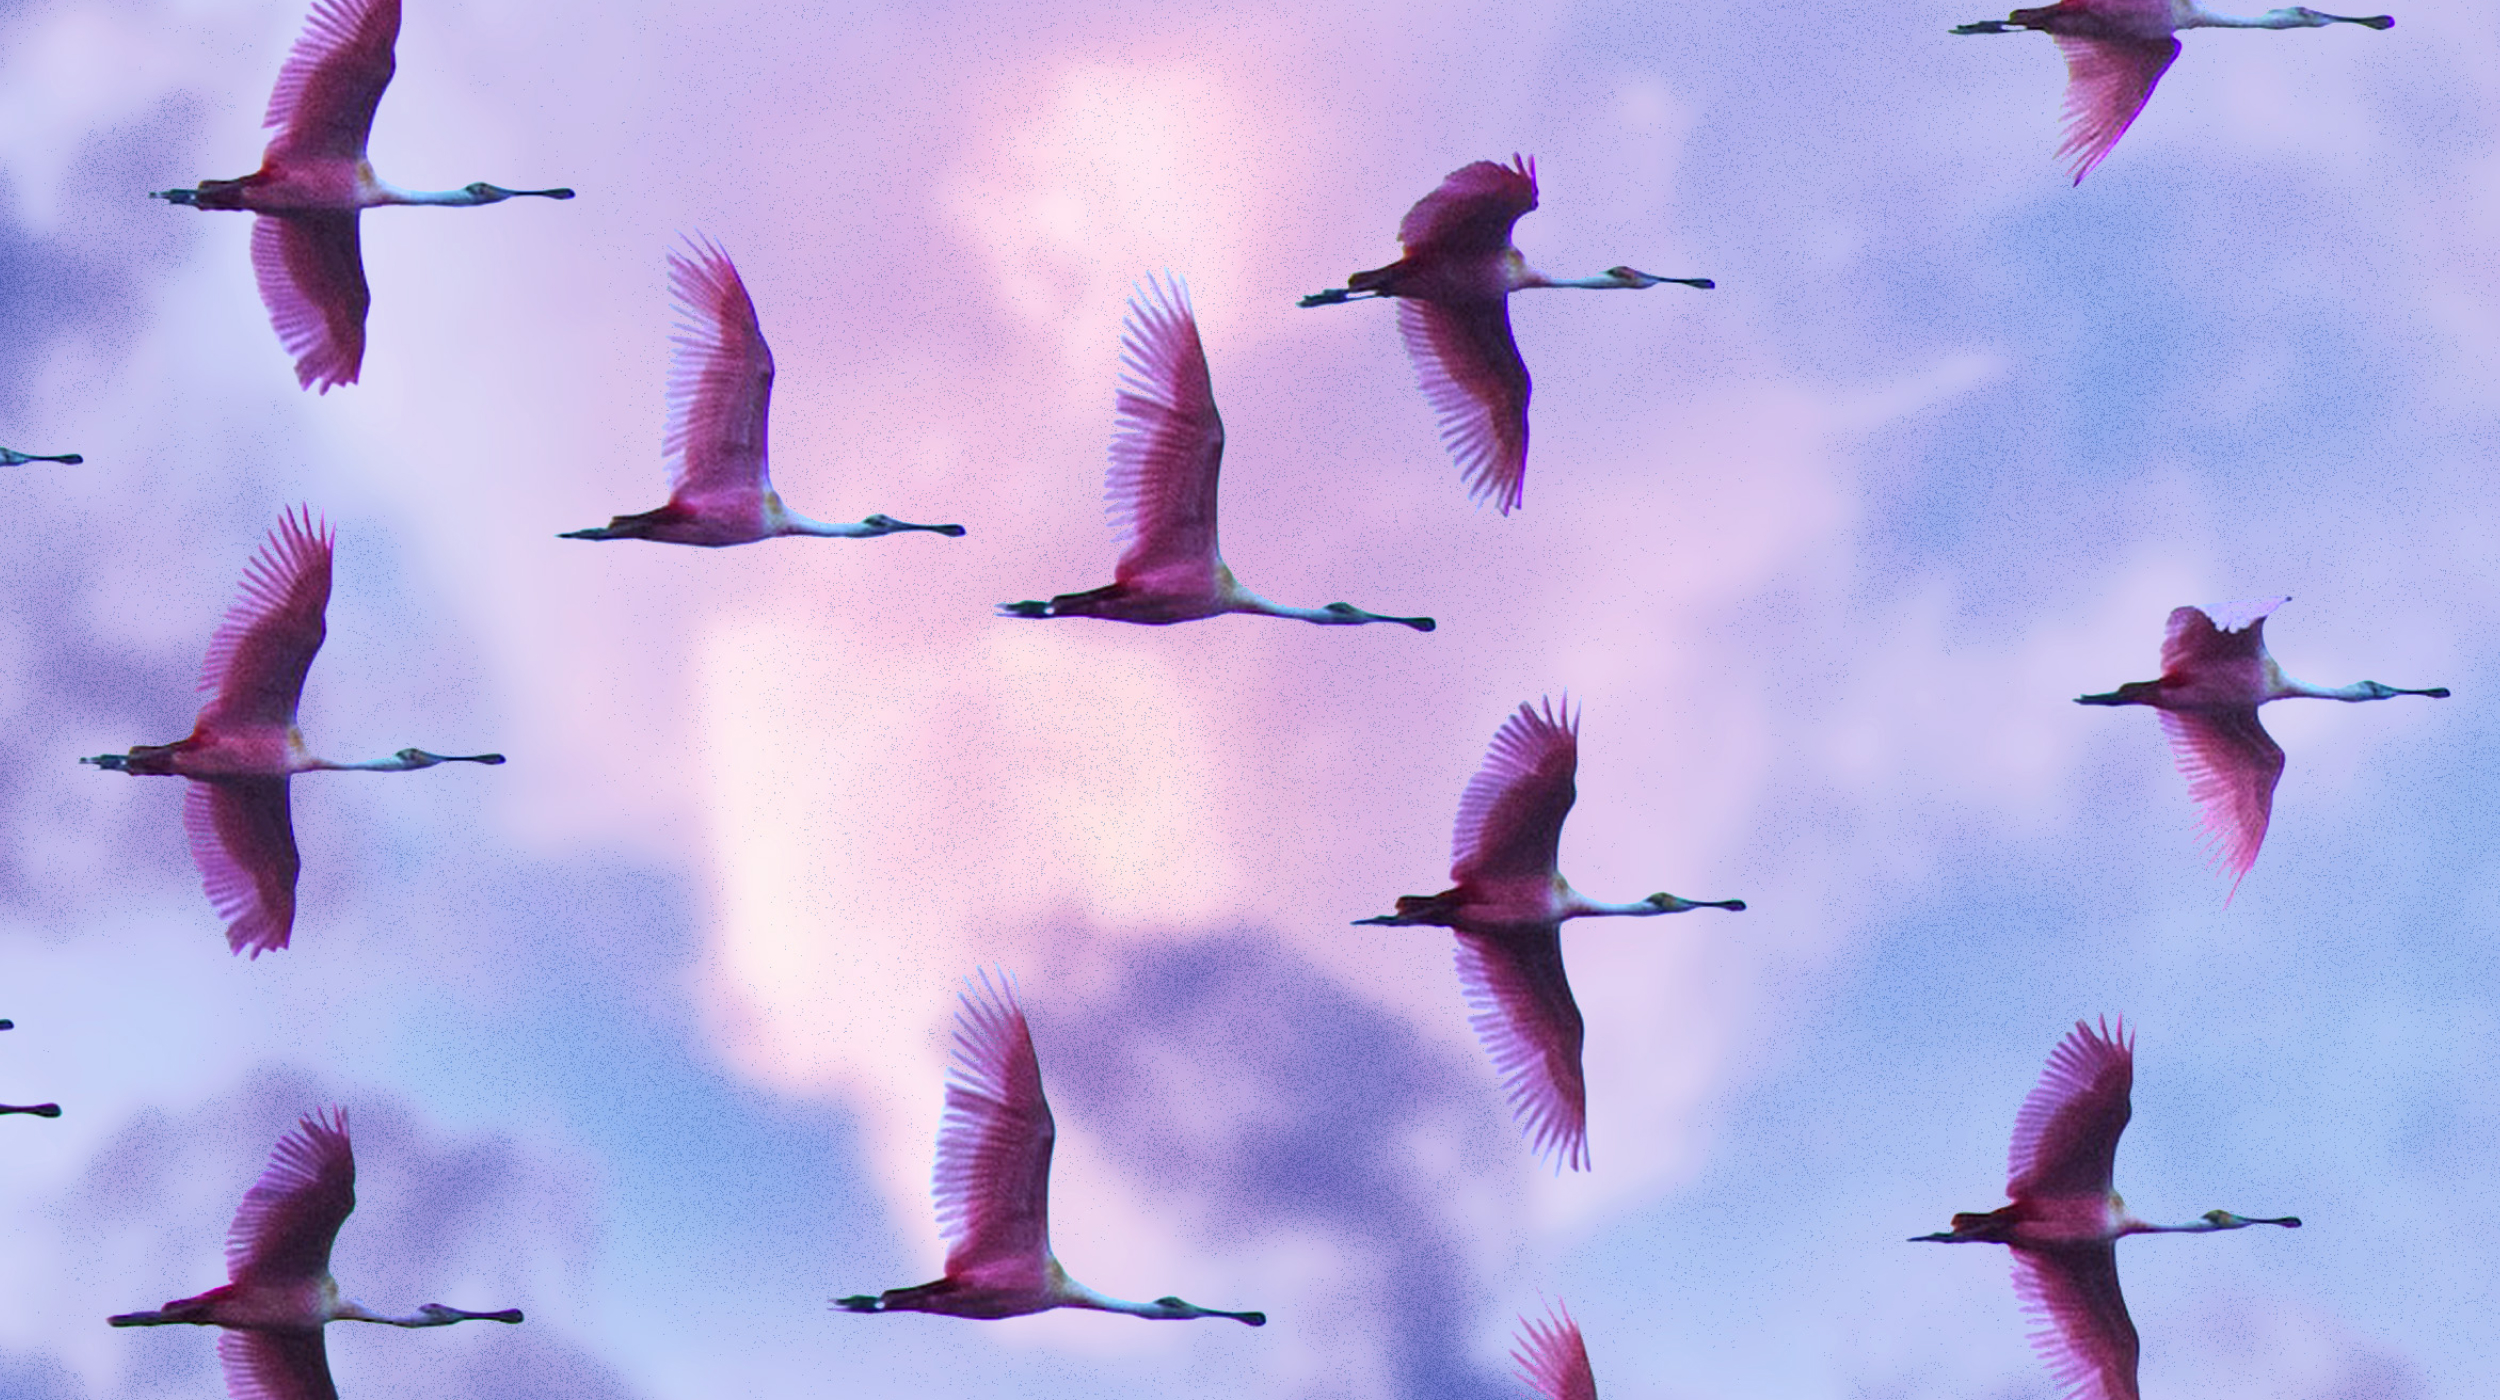 a flock of pink birds flying through a cloudy sky.